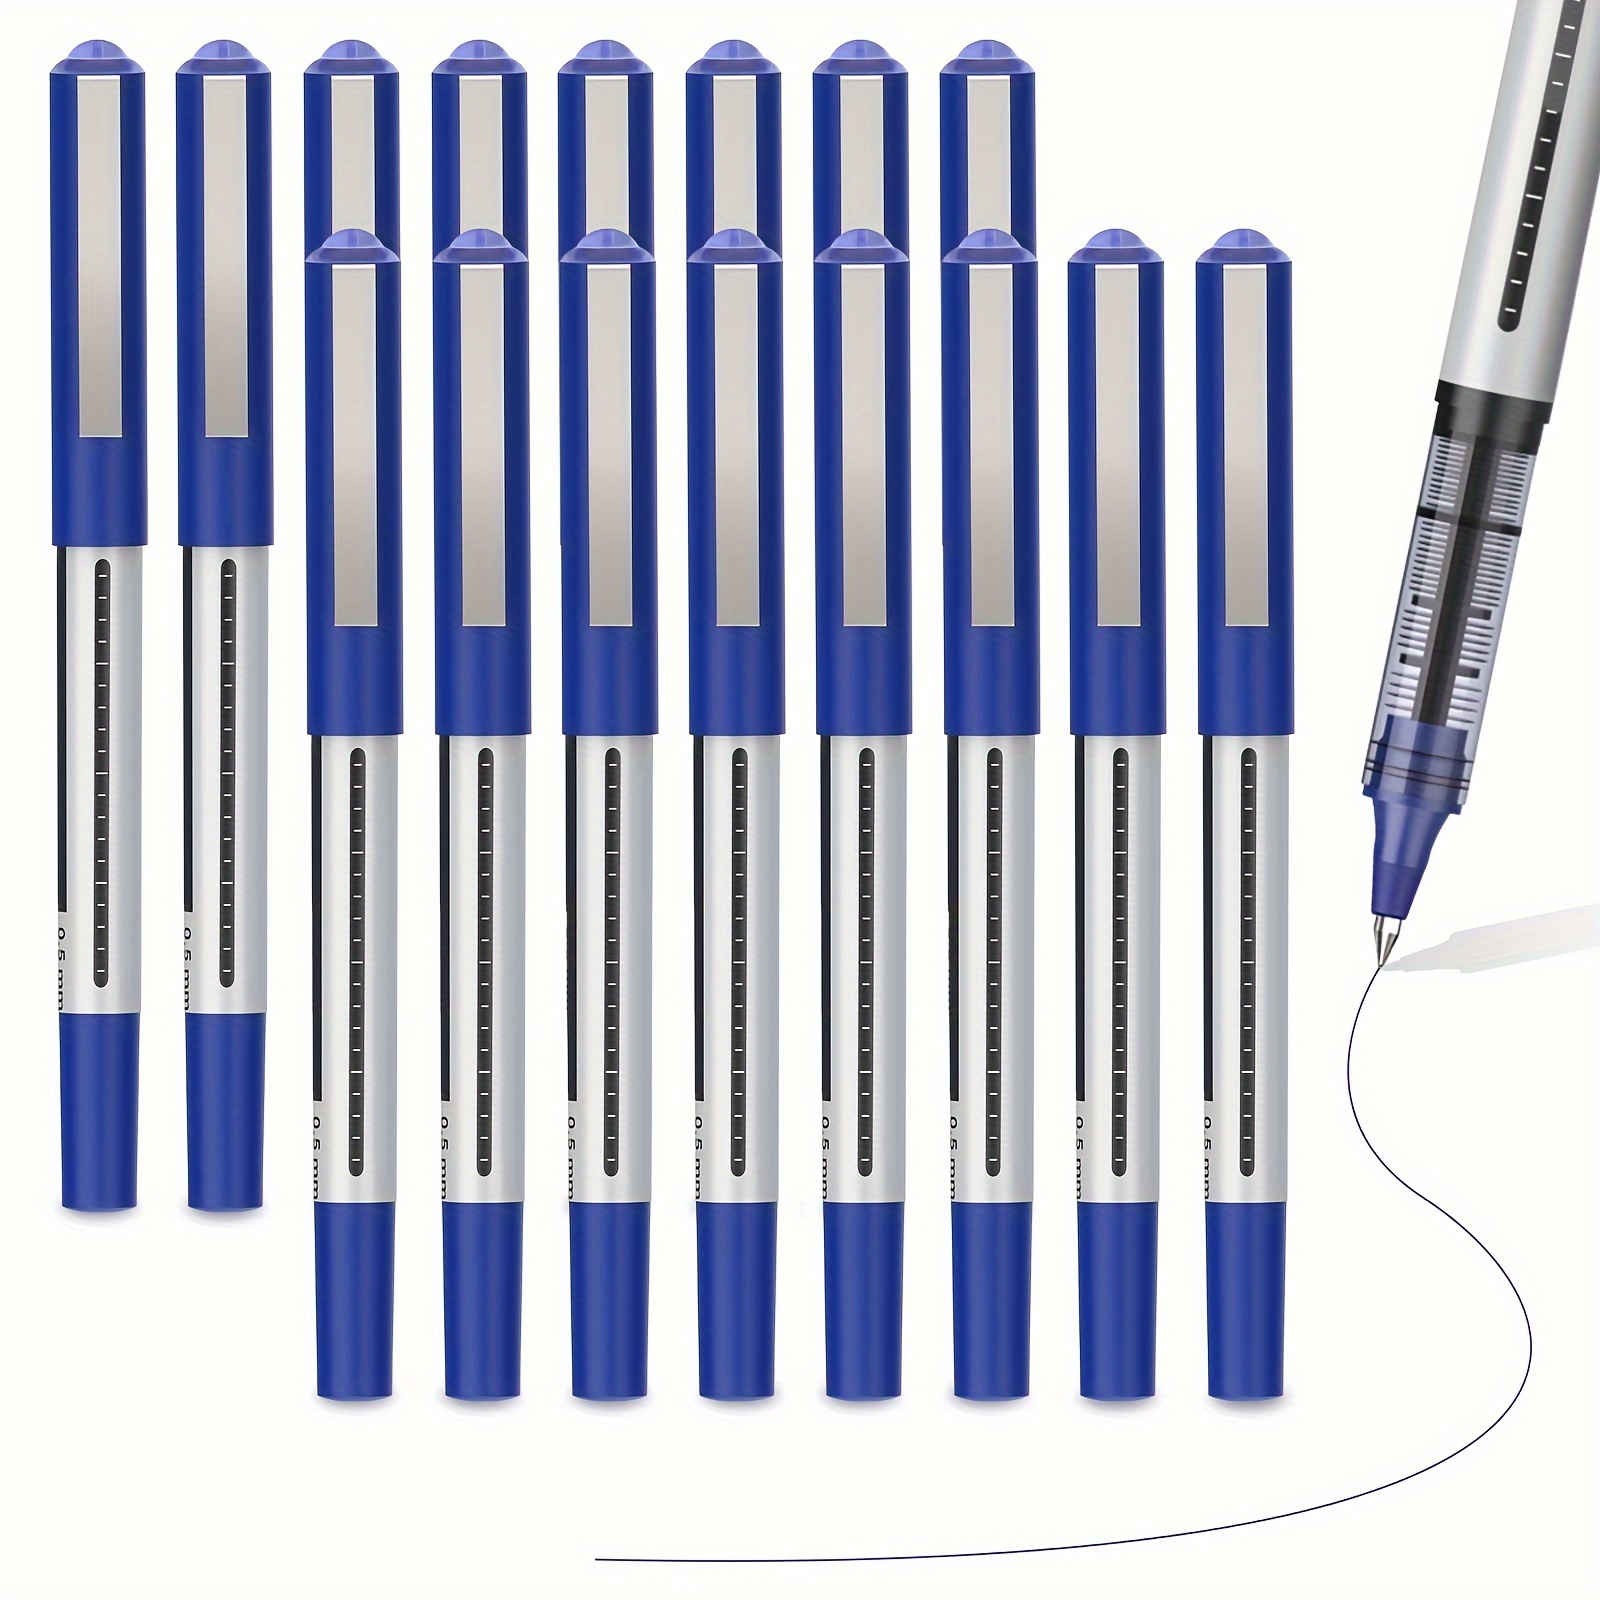  Gel Ink Pen Extra fine point pens Ballpoint pen Liquid